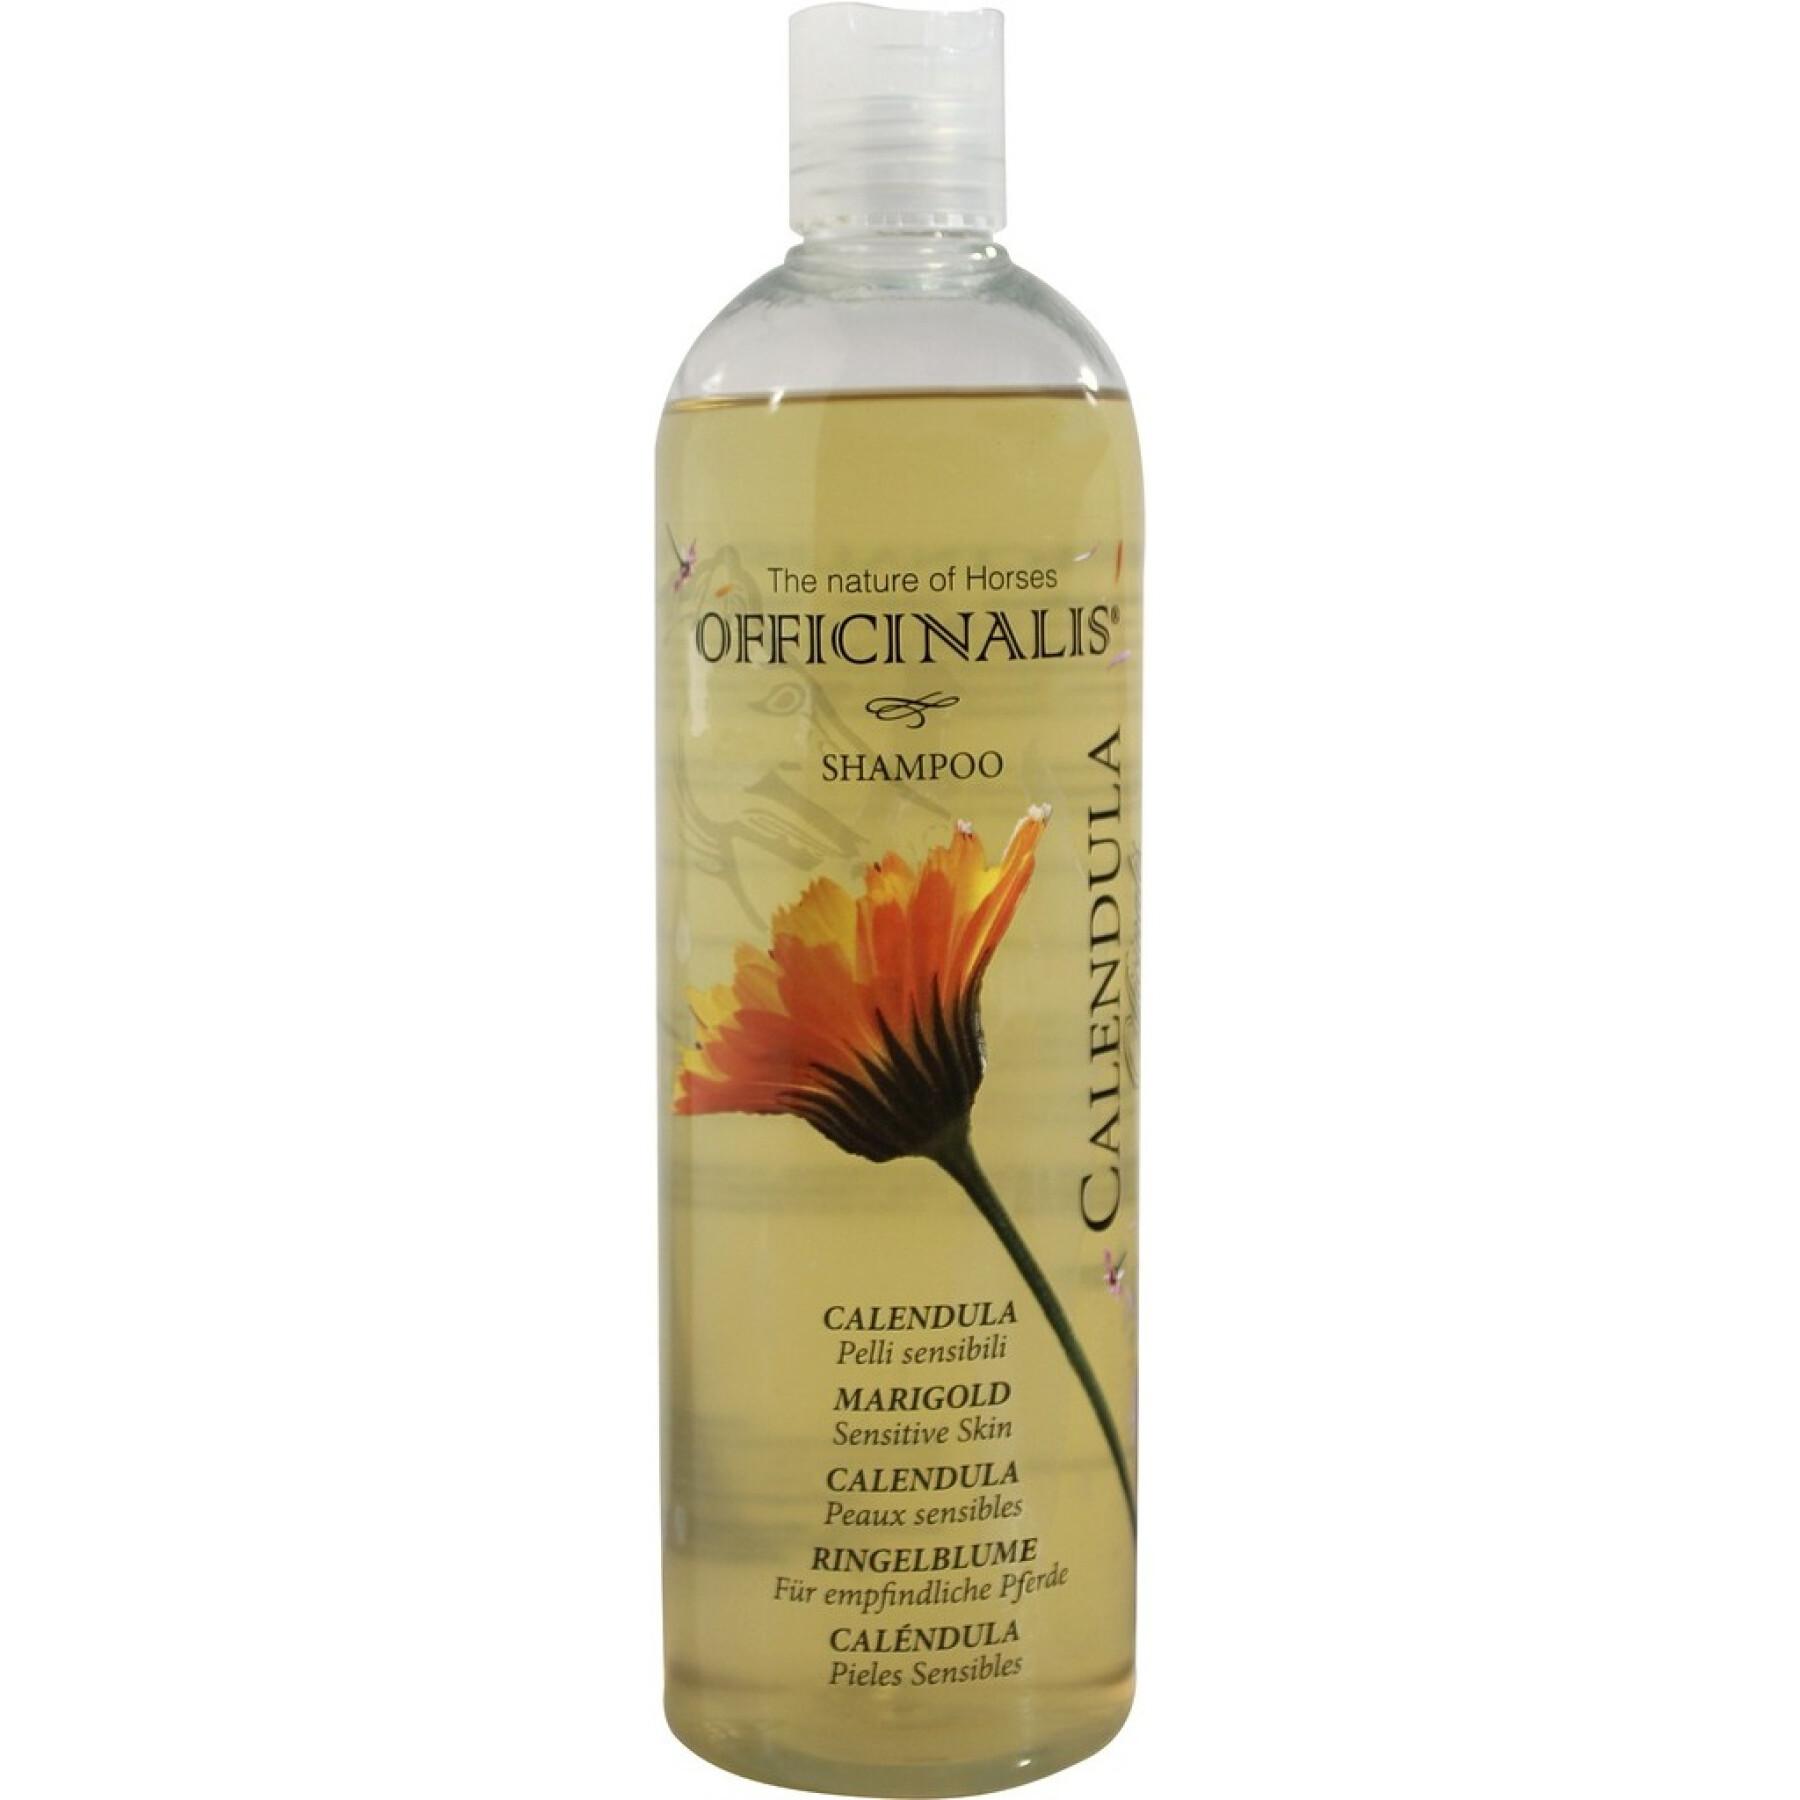 Shampoo Officinalis “Calendula”